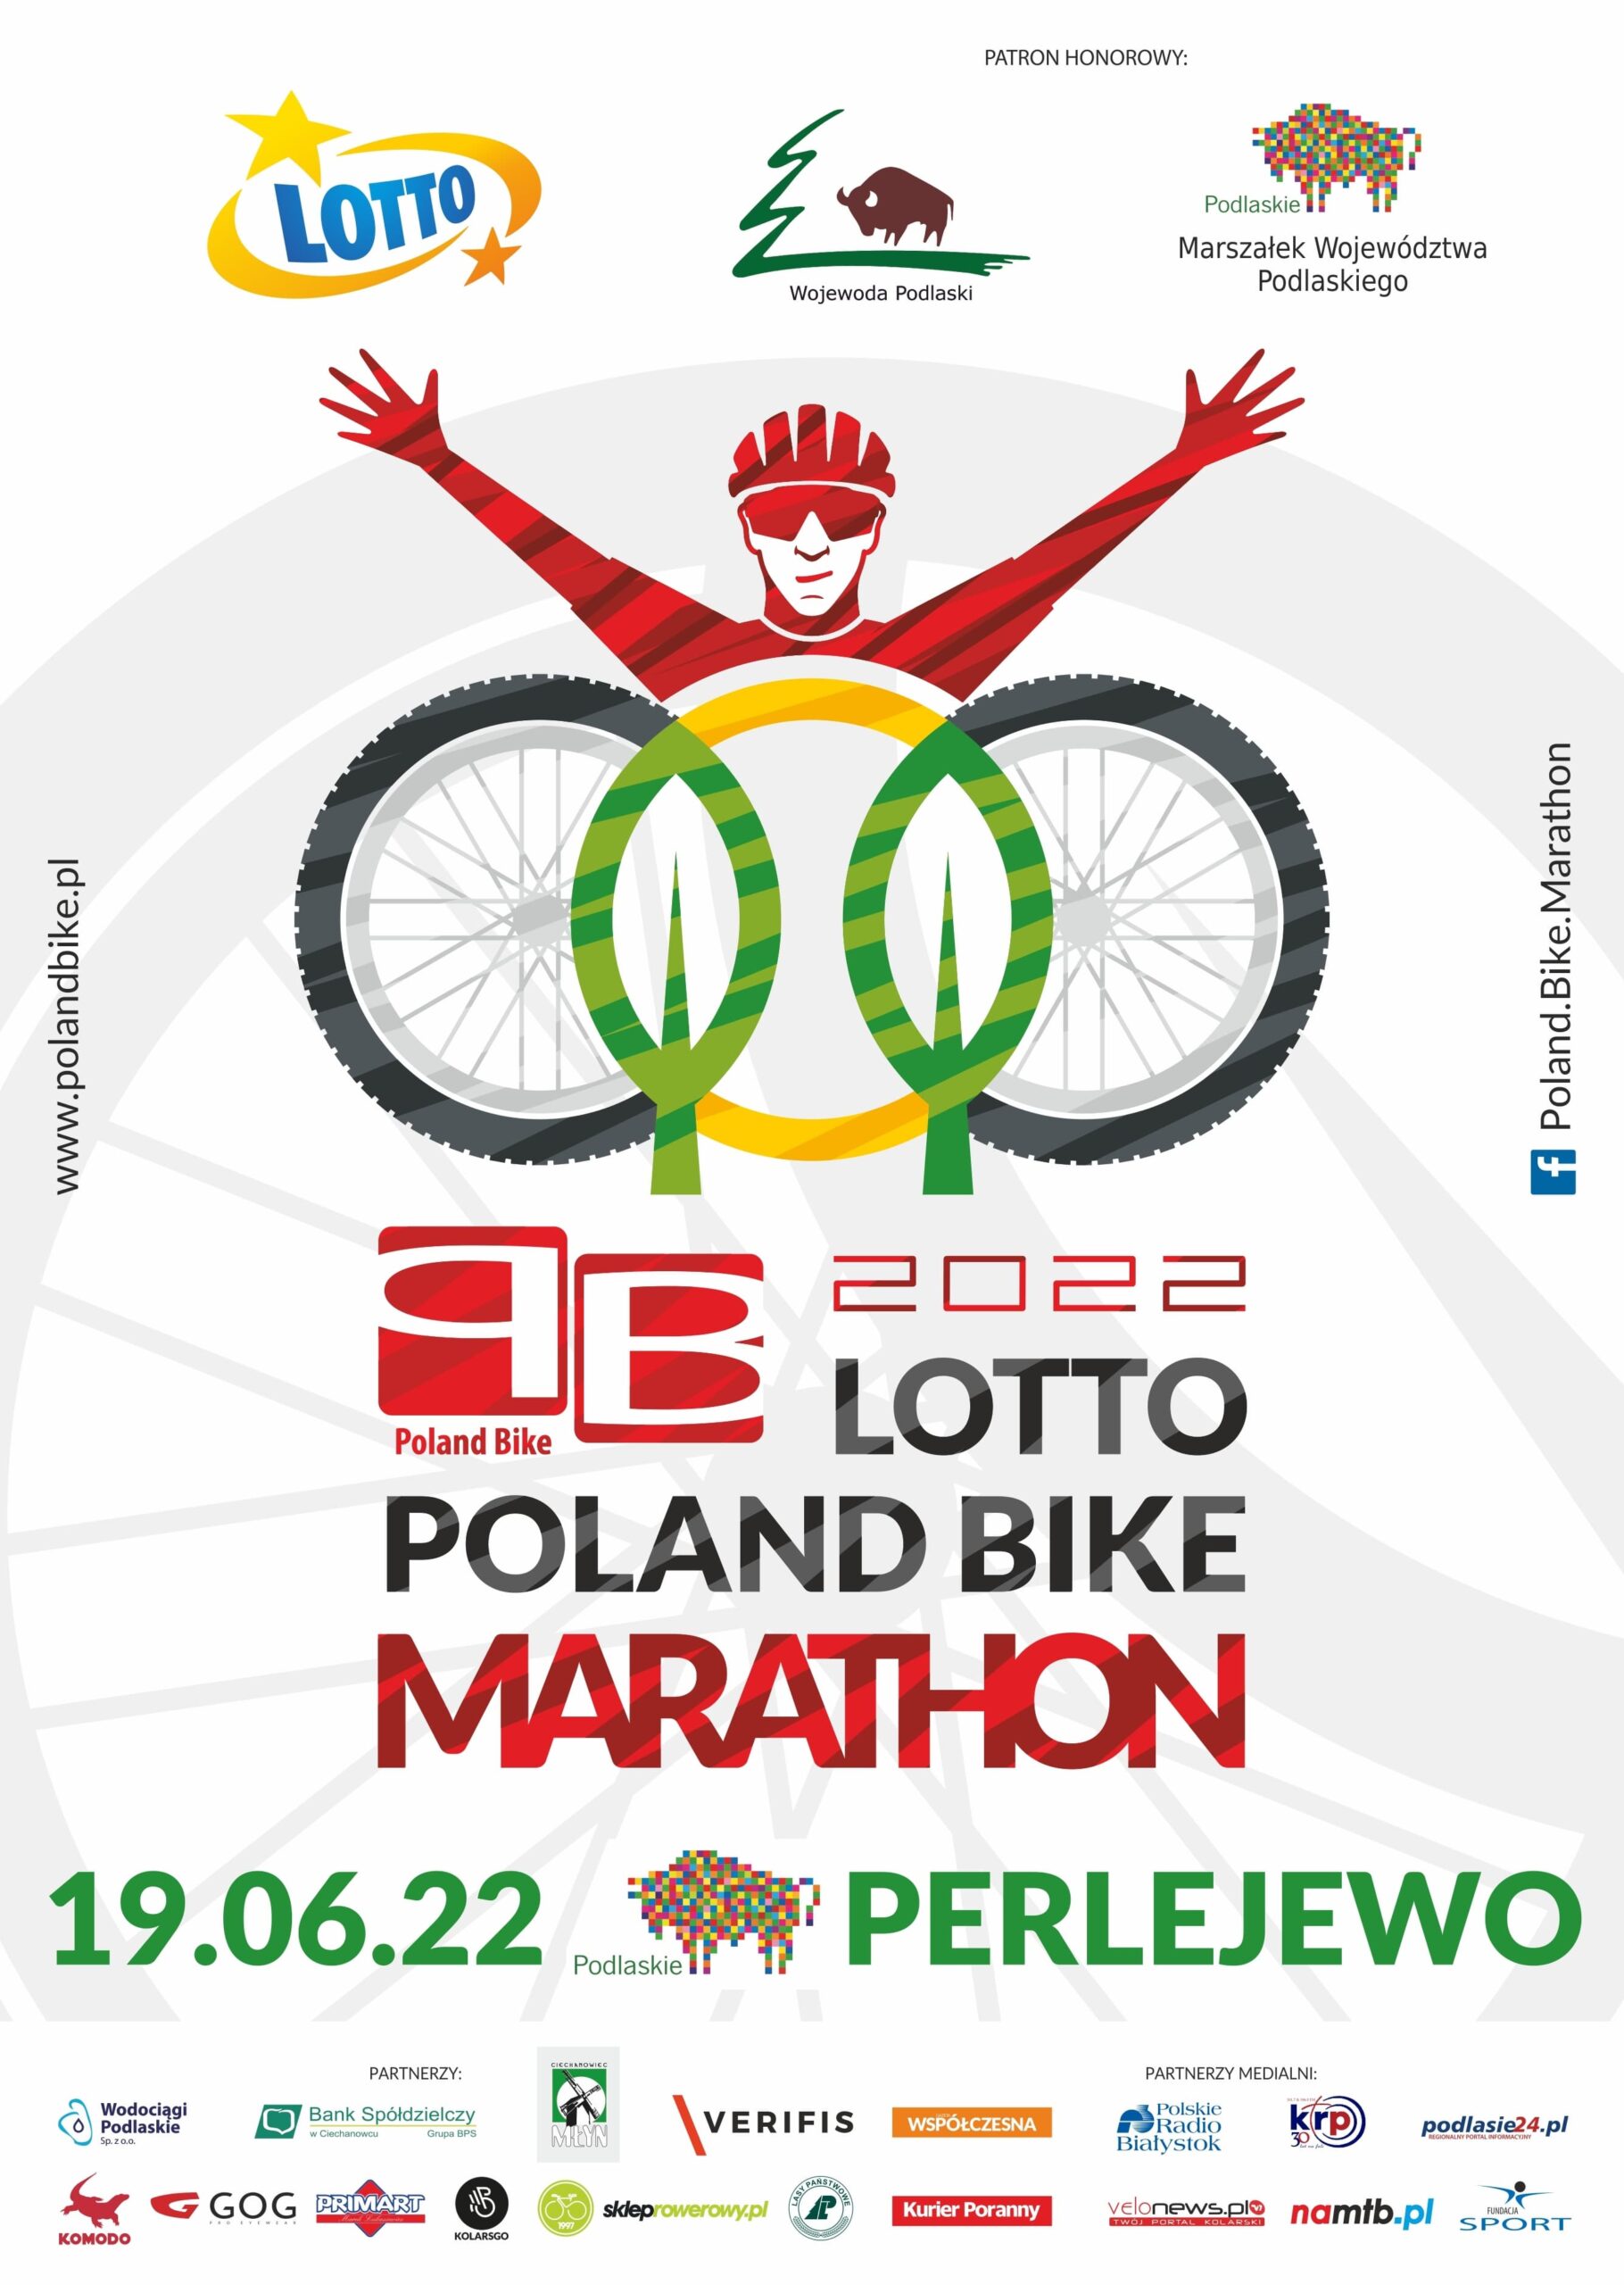 LOTTO Poland Bike Marathon jedzie do Perlejewa na Podlasiu